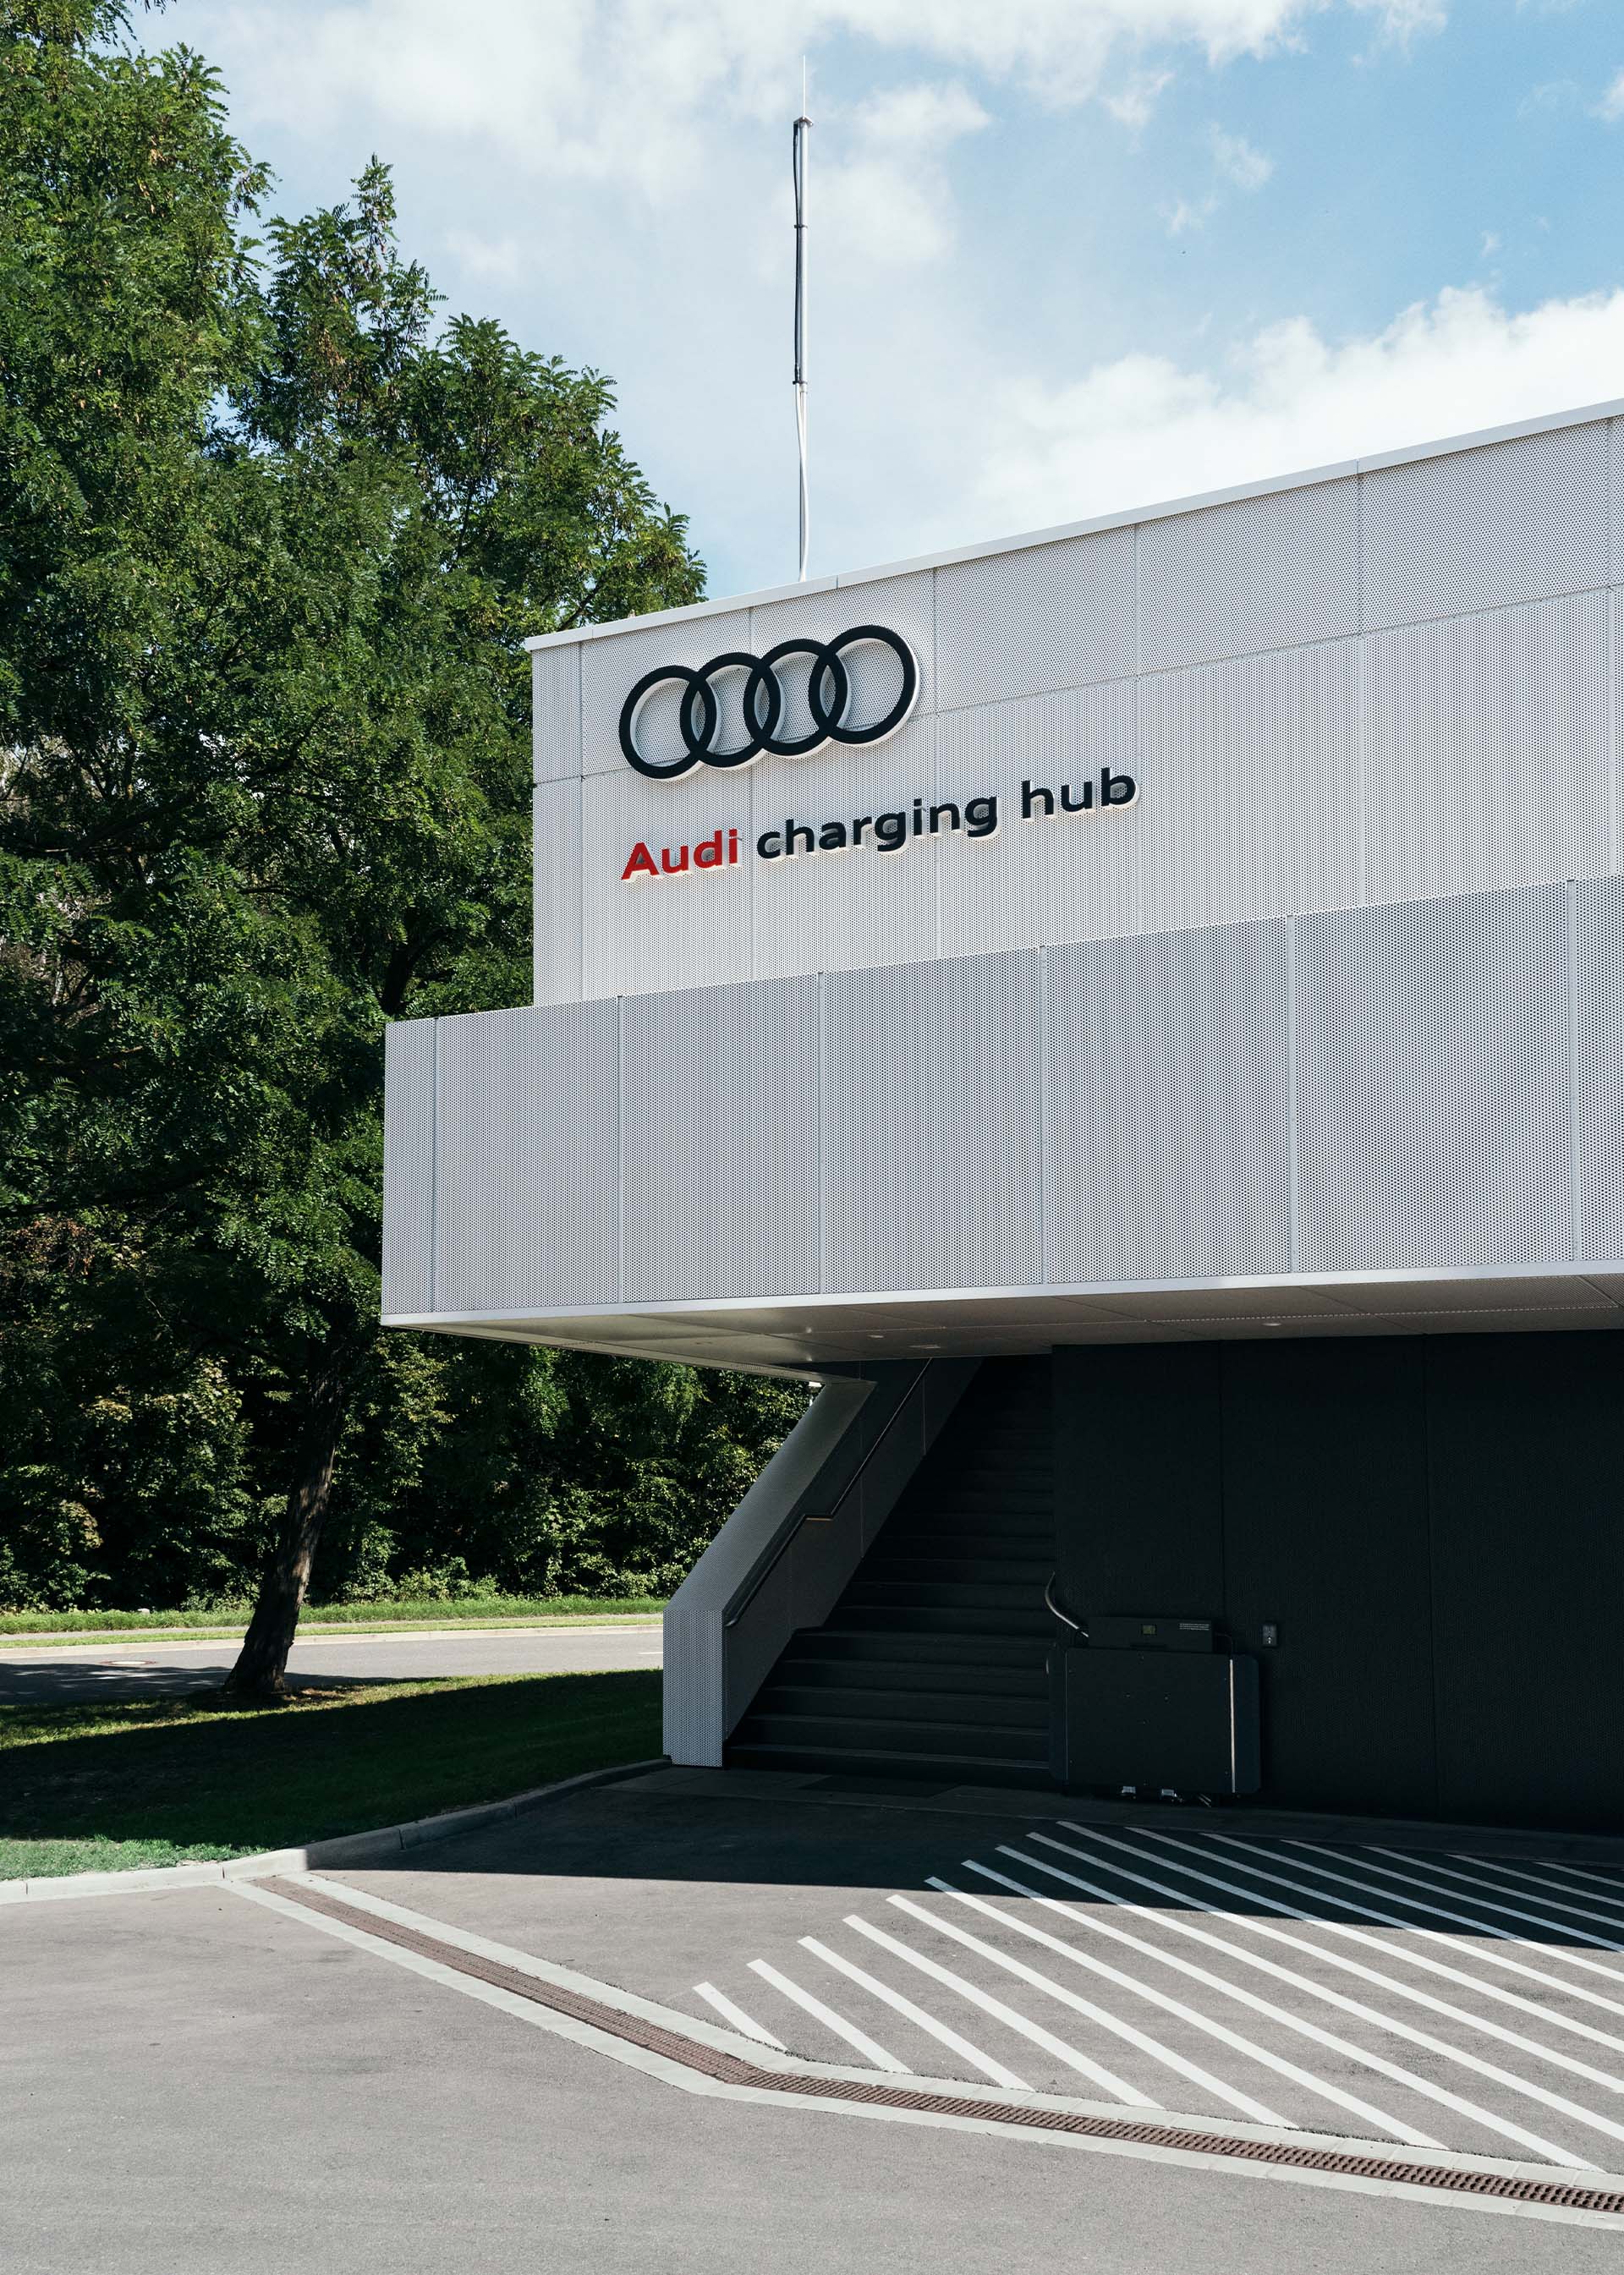 Eingangsbereich des Audi charging hubs in Nürnberg.